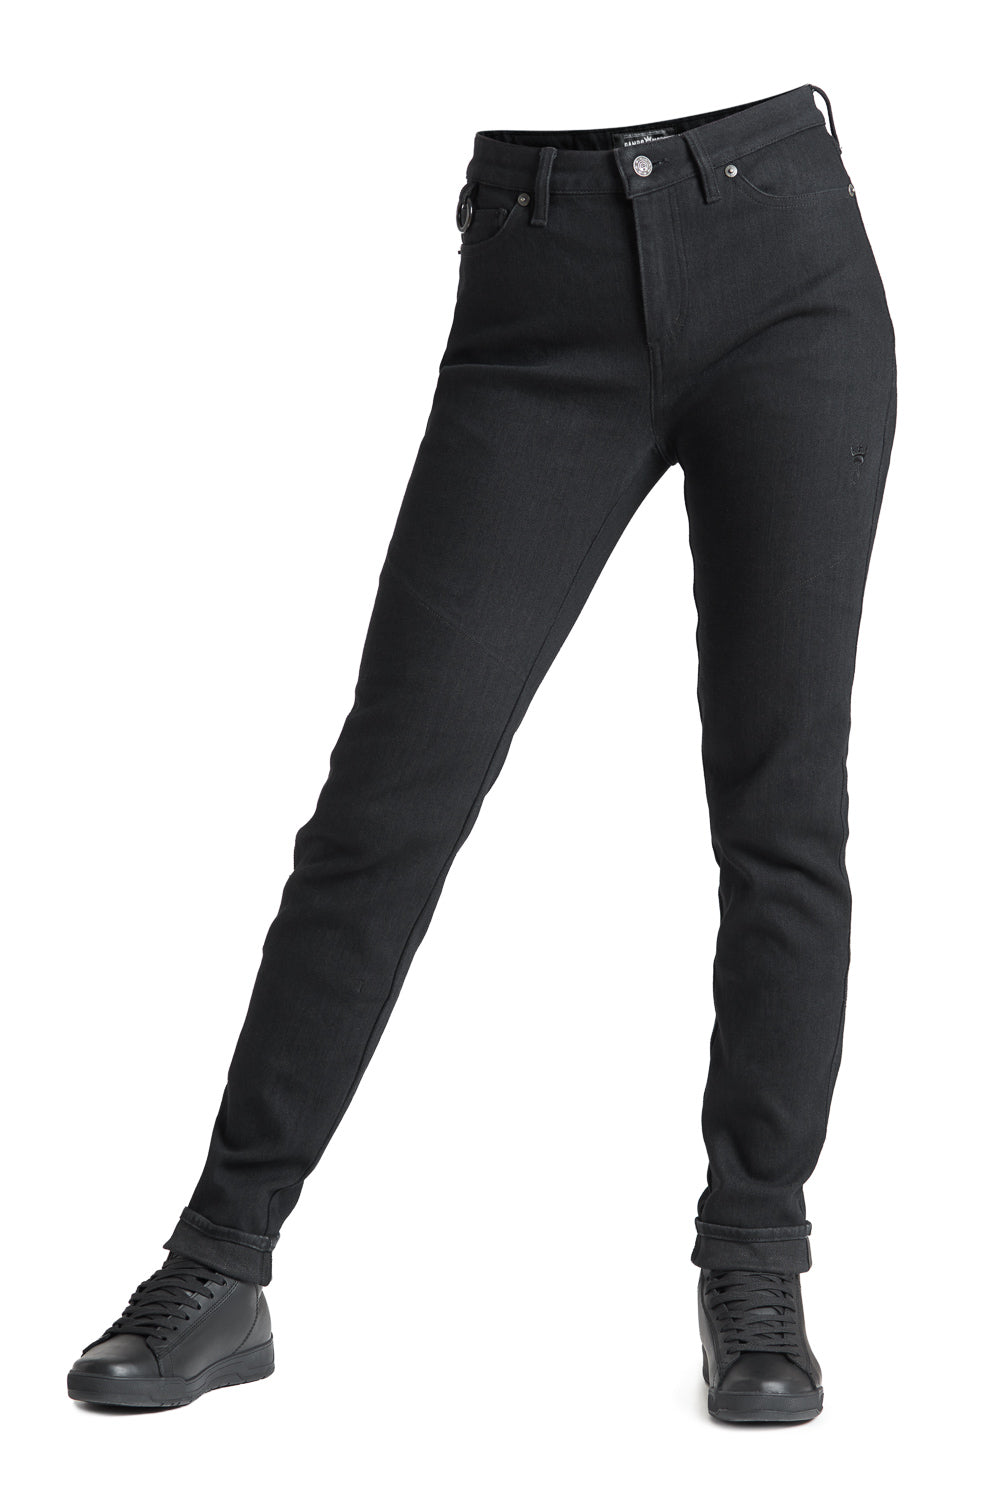 HULG Pantalon Moto Mujer Pantalon Proteccion Moto Pantalon Impermeable Moto  Jeans Drop-resistant Breathable Jeans Racing Pants (black,M)